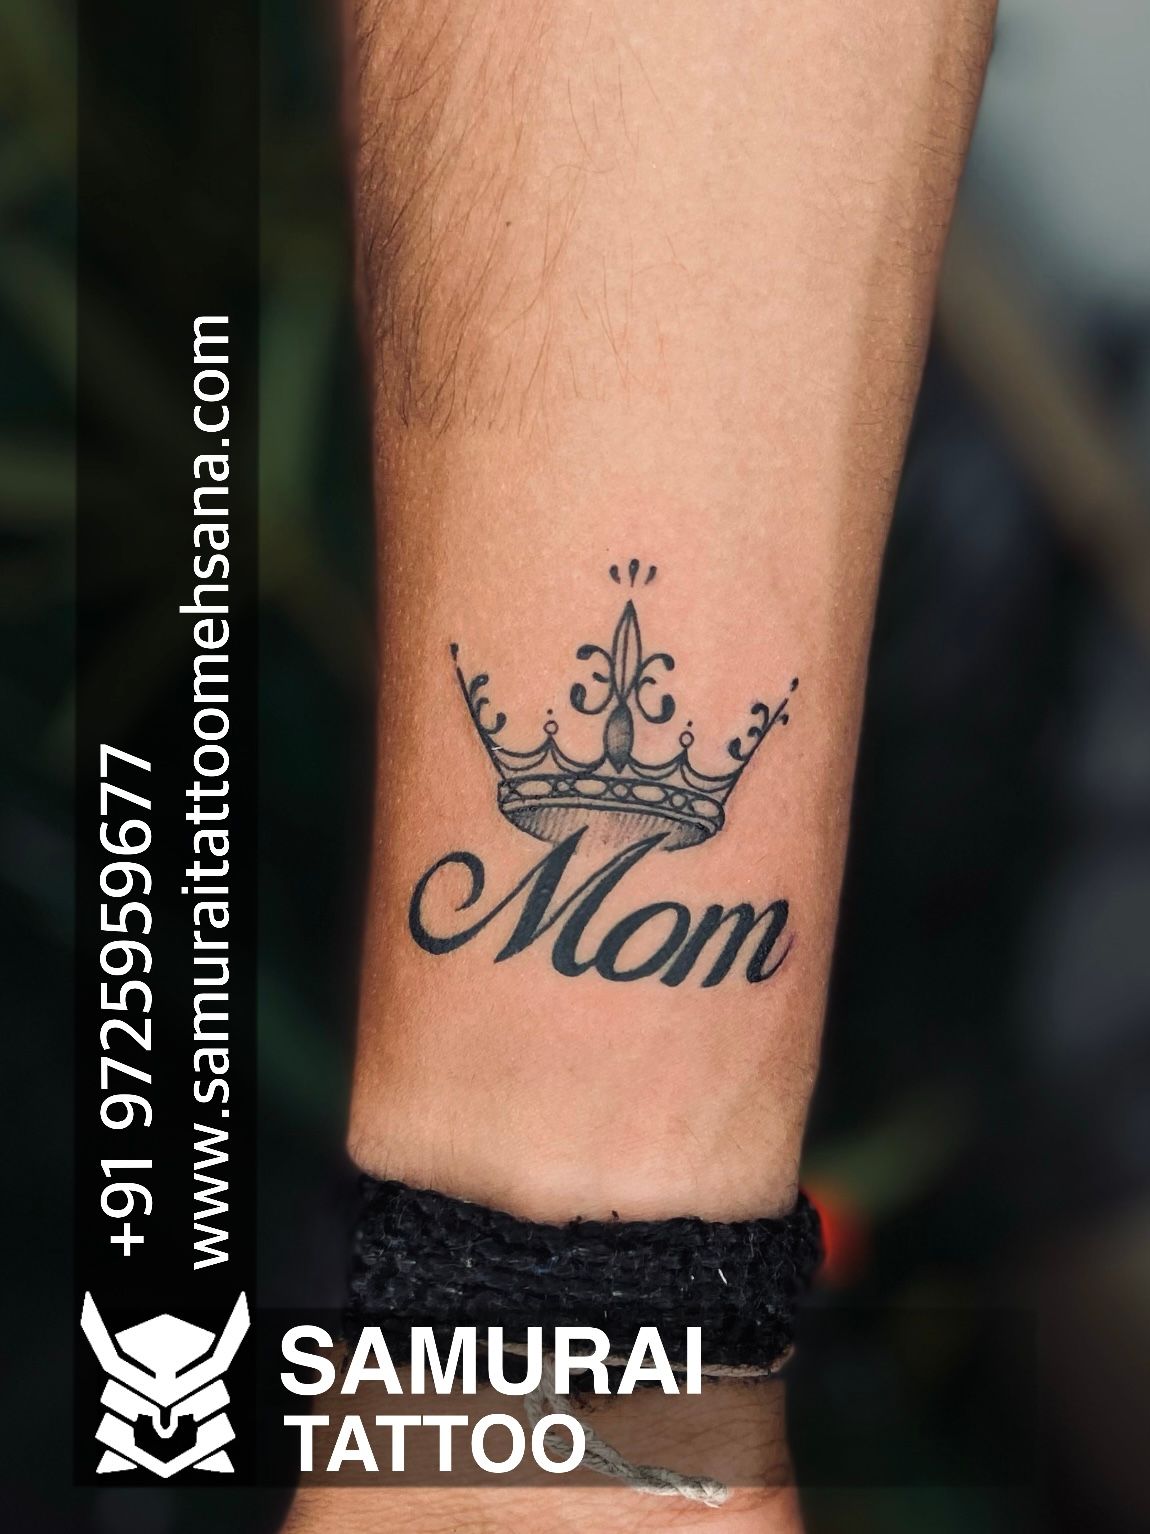 19 Tattoo Ideas To Celebrate Motherhood